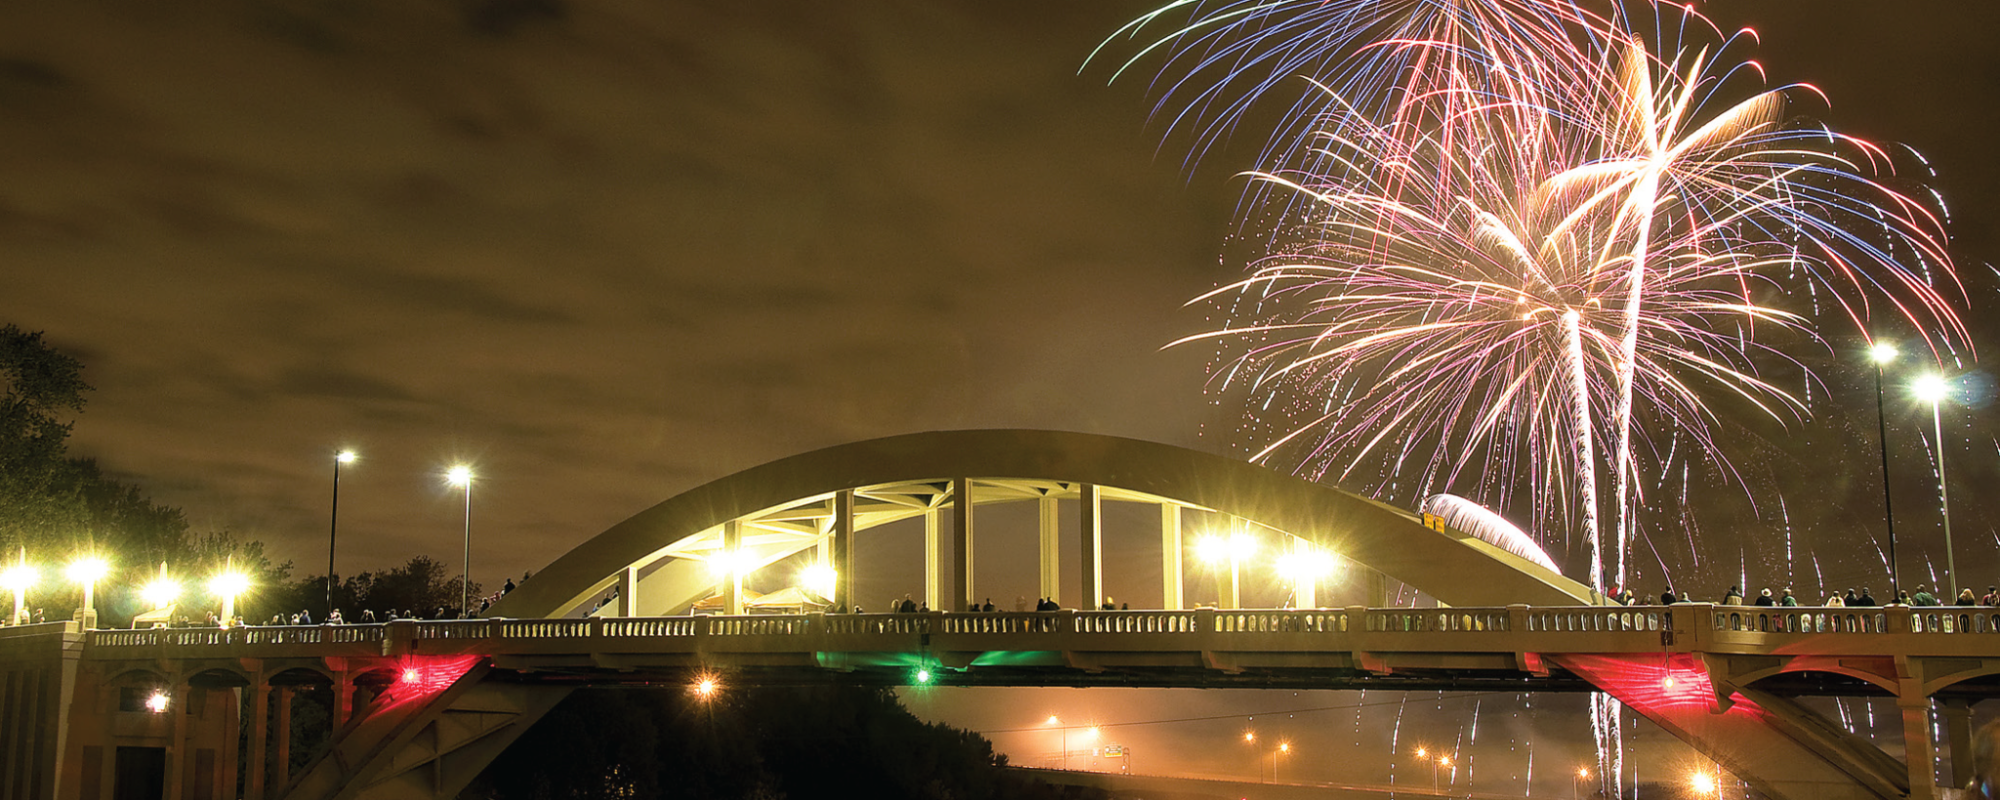 Fireworks burst above a bridge at night.